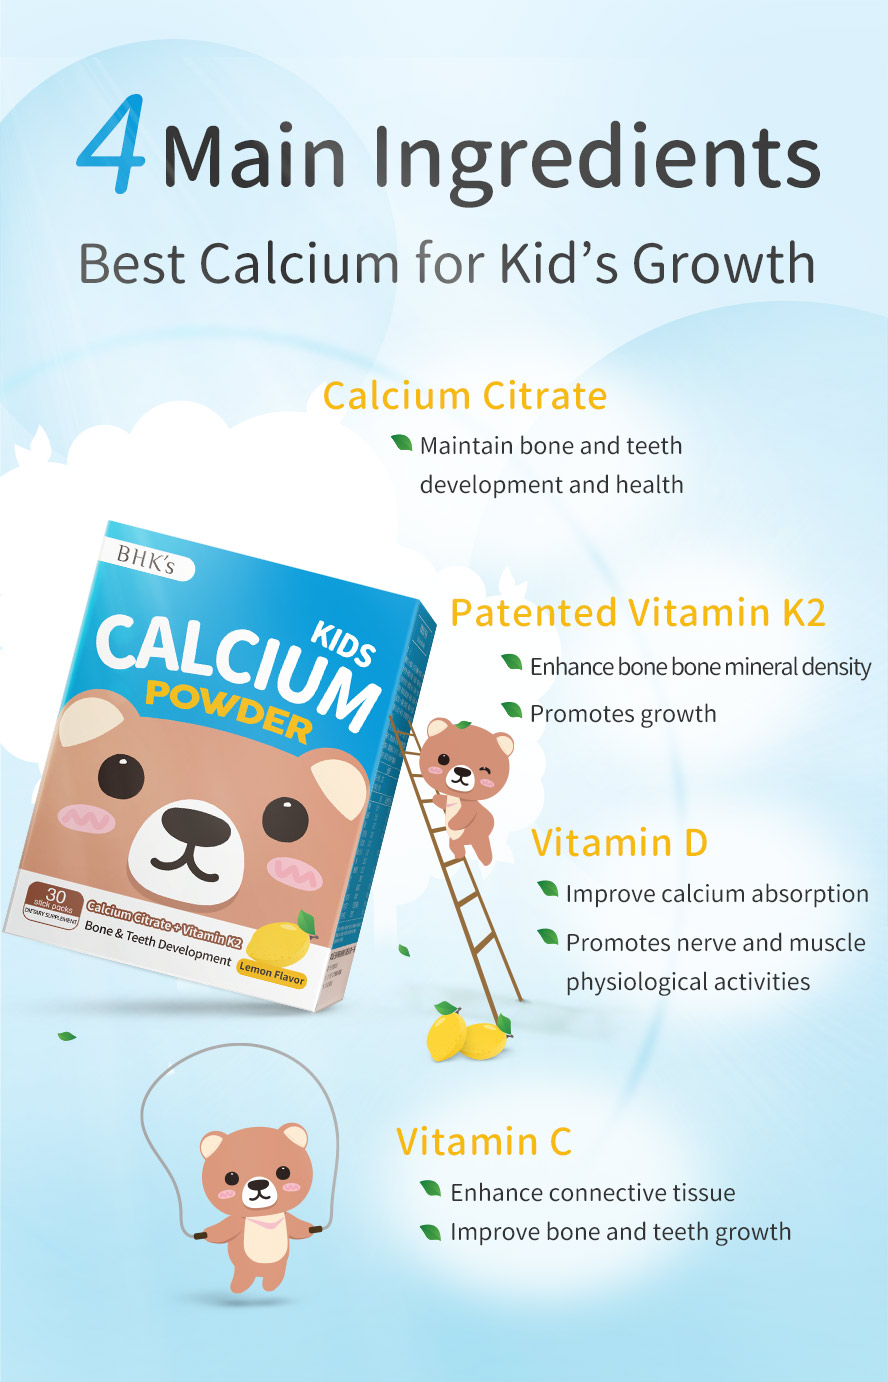 BHK's Kids Calcium Powder contains calcium citrate, patented vitamin K2, vitamin D, and vitamin C to enhance bone and teeth health.